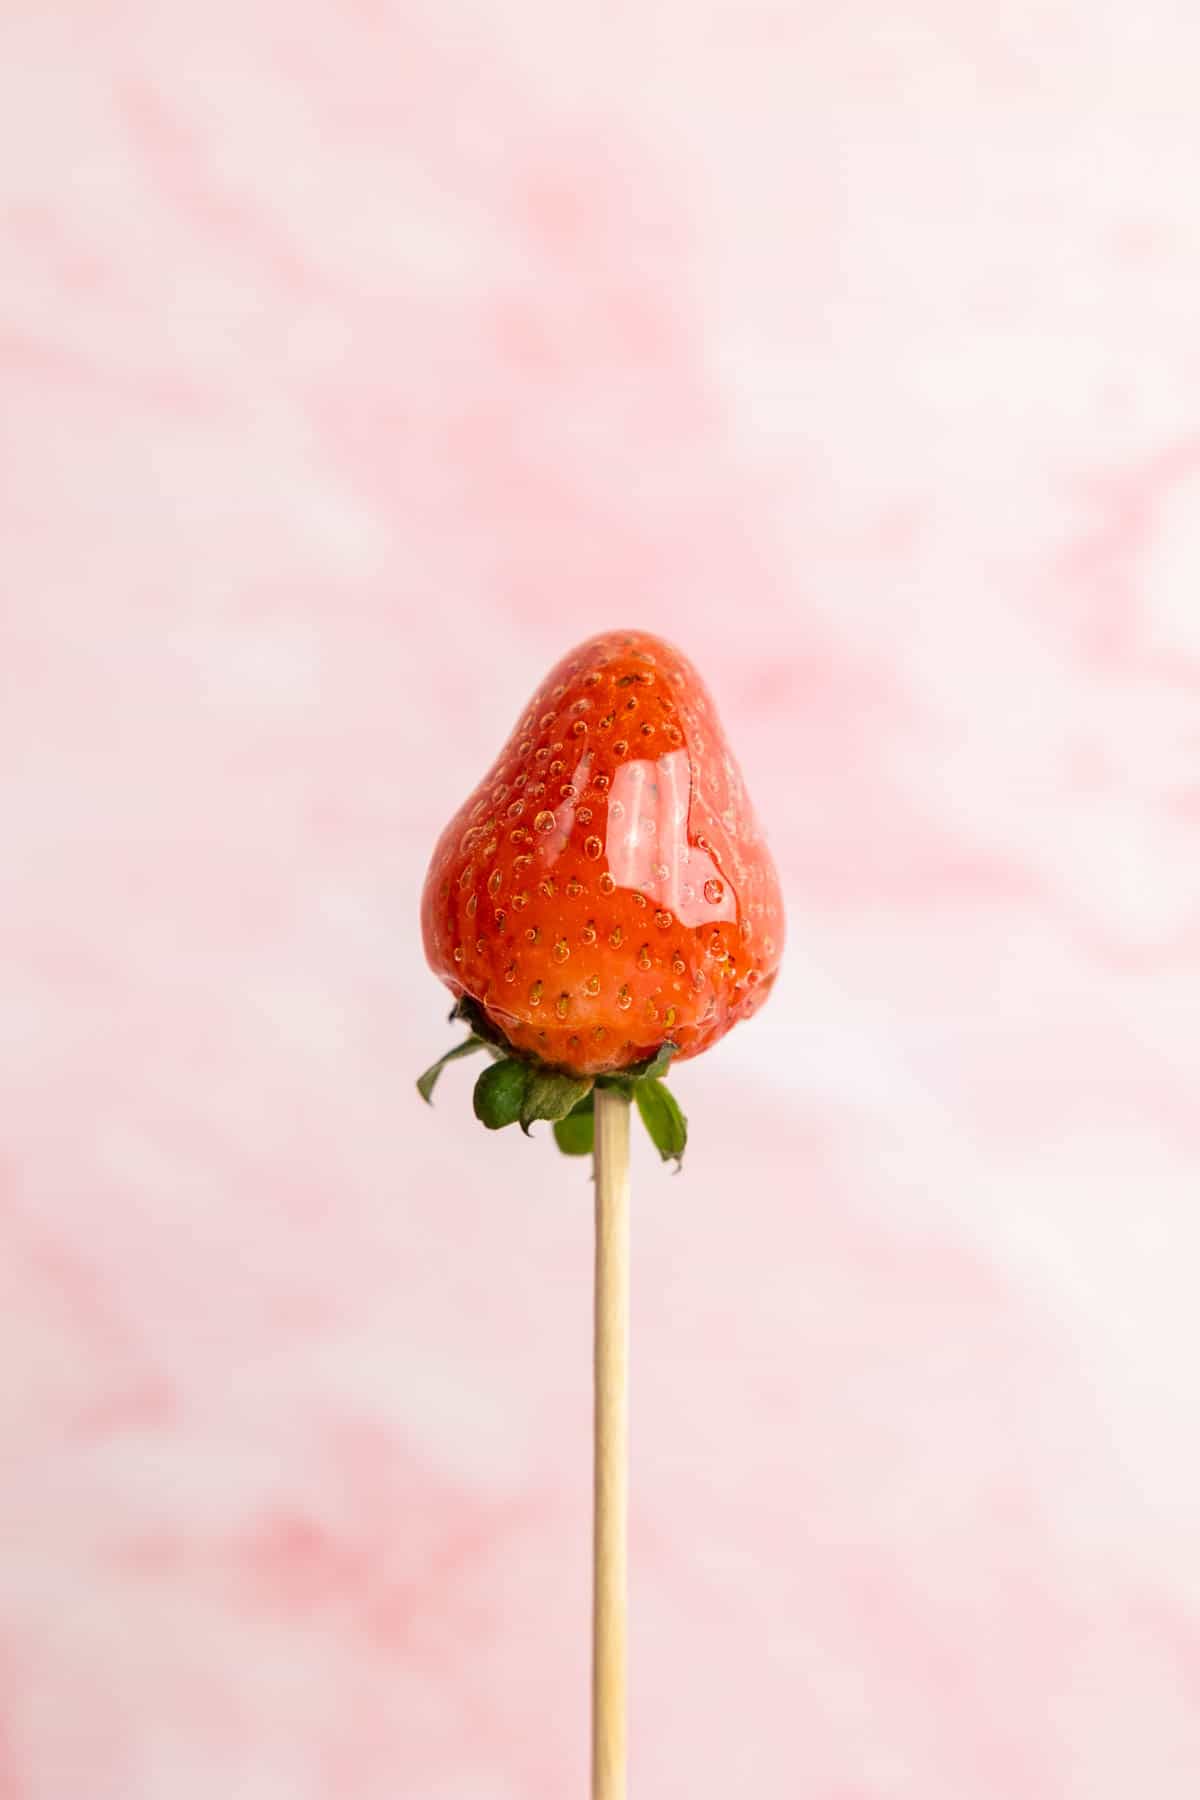 Tanghulu strawberry on a stick.